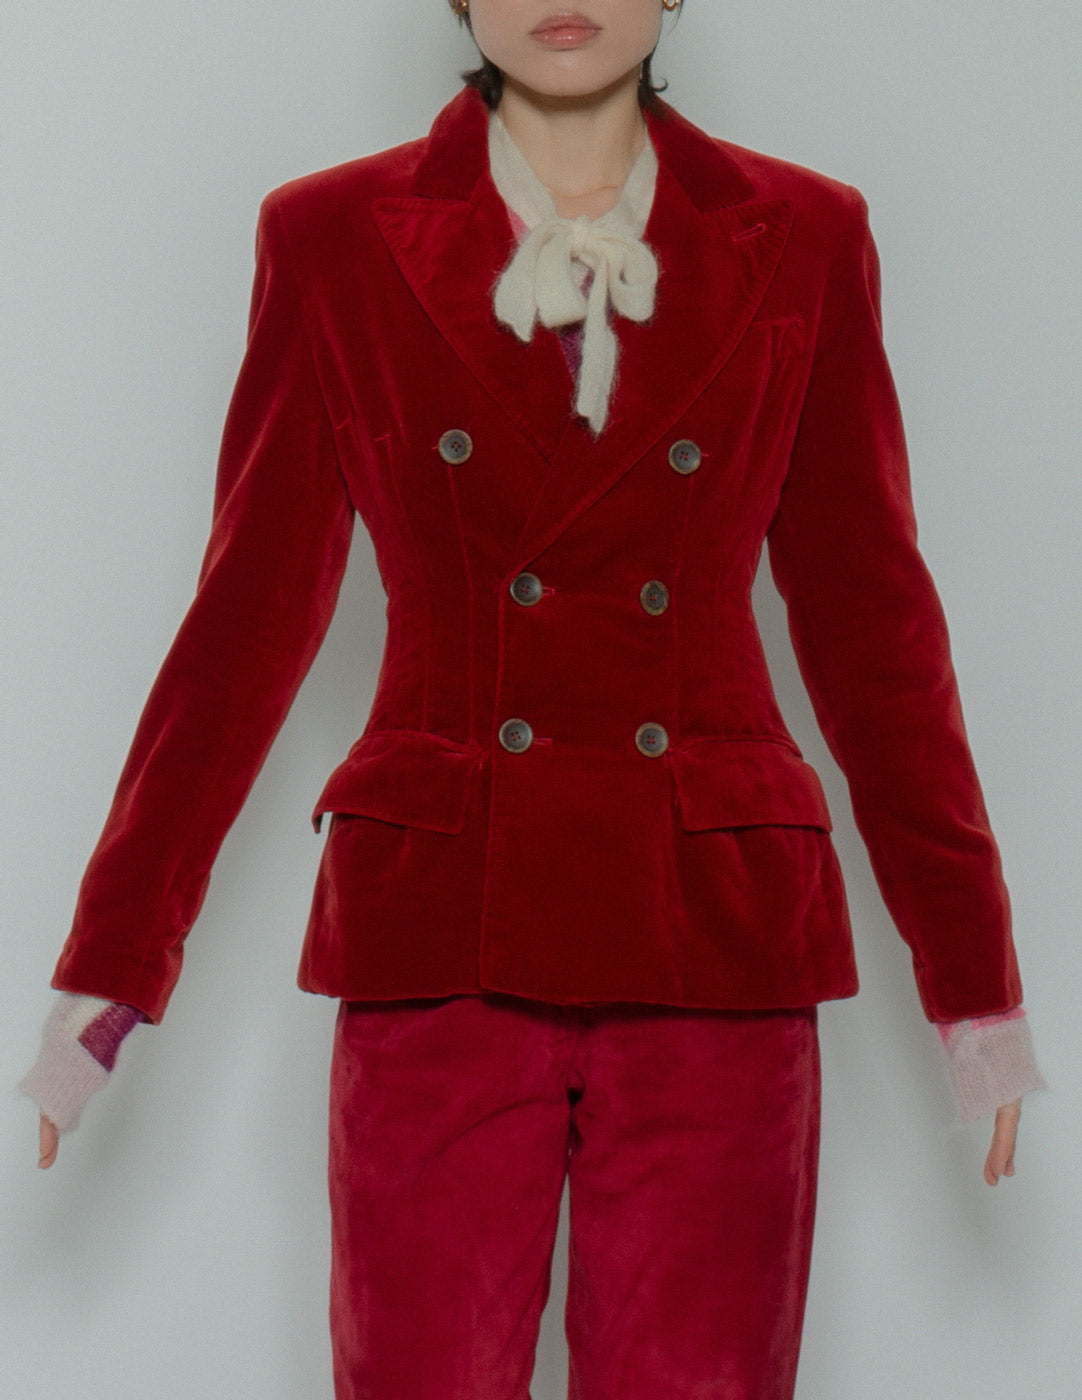 Jean Paul Gaultier vintage red velvet blazer front detail